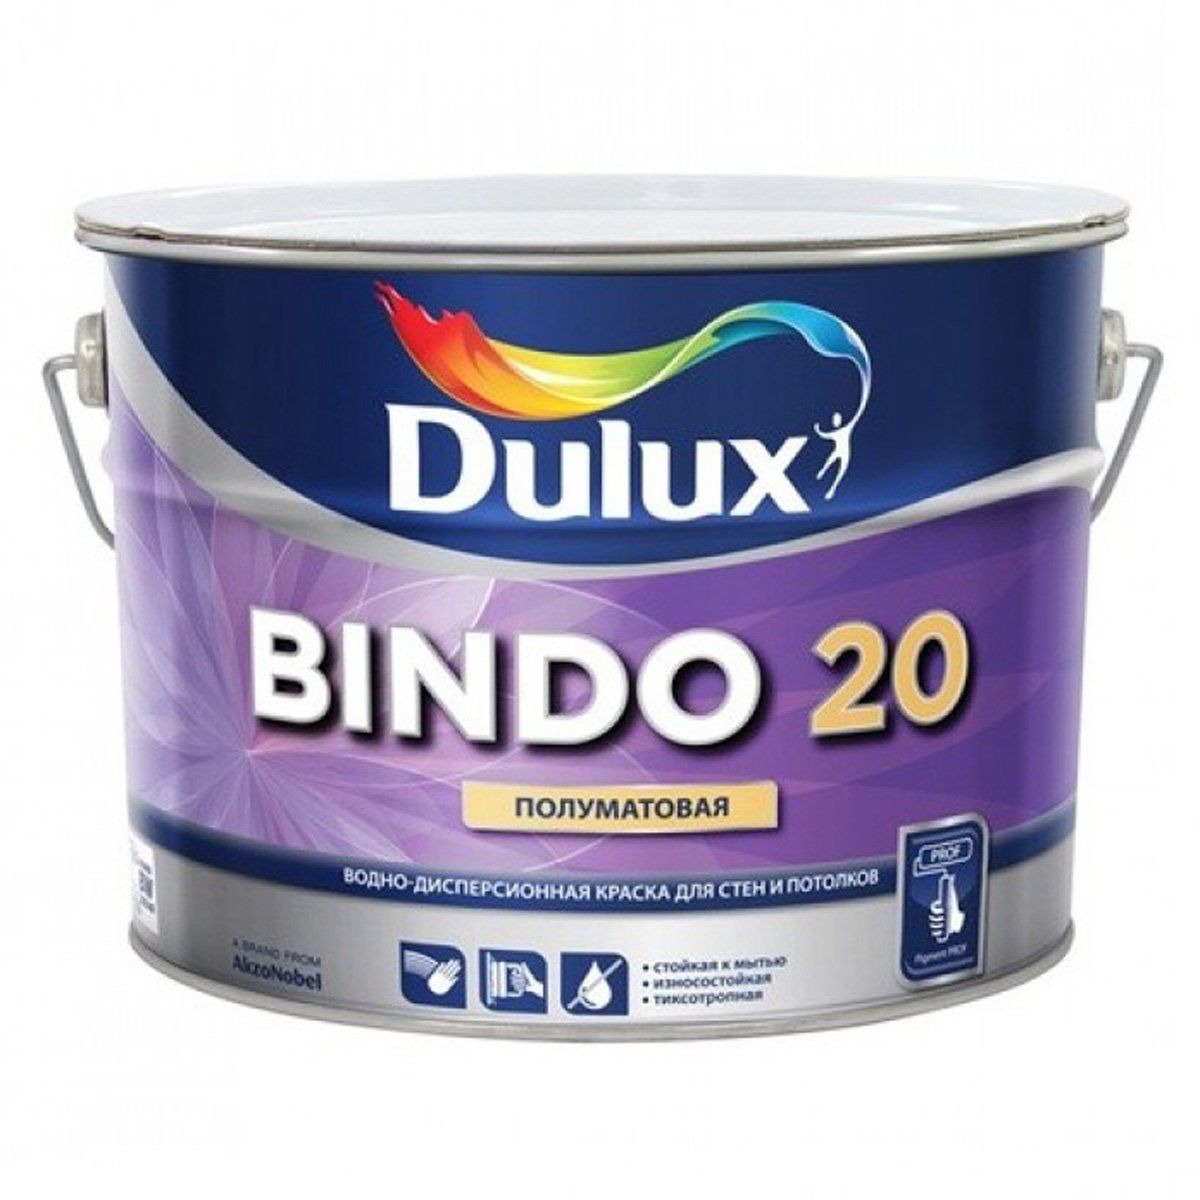 Dulux Bindo 3 9л